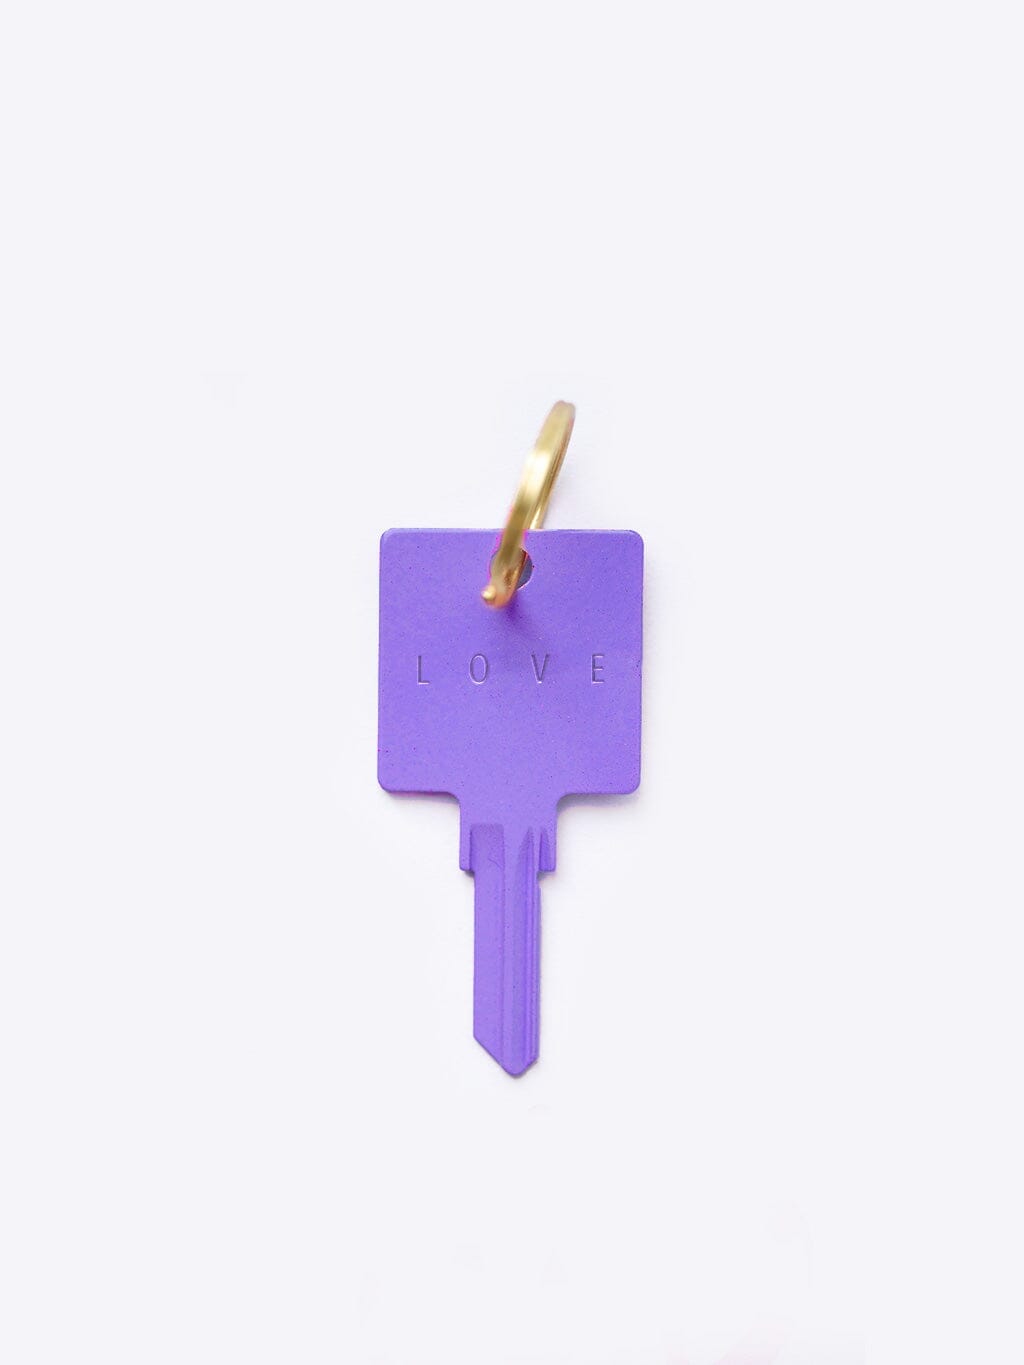 N - Lavender Original Keychain Key Chain The Giving Keys 